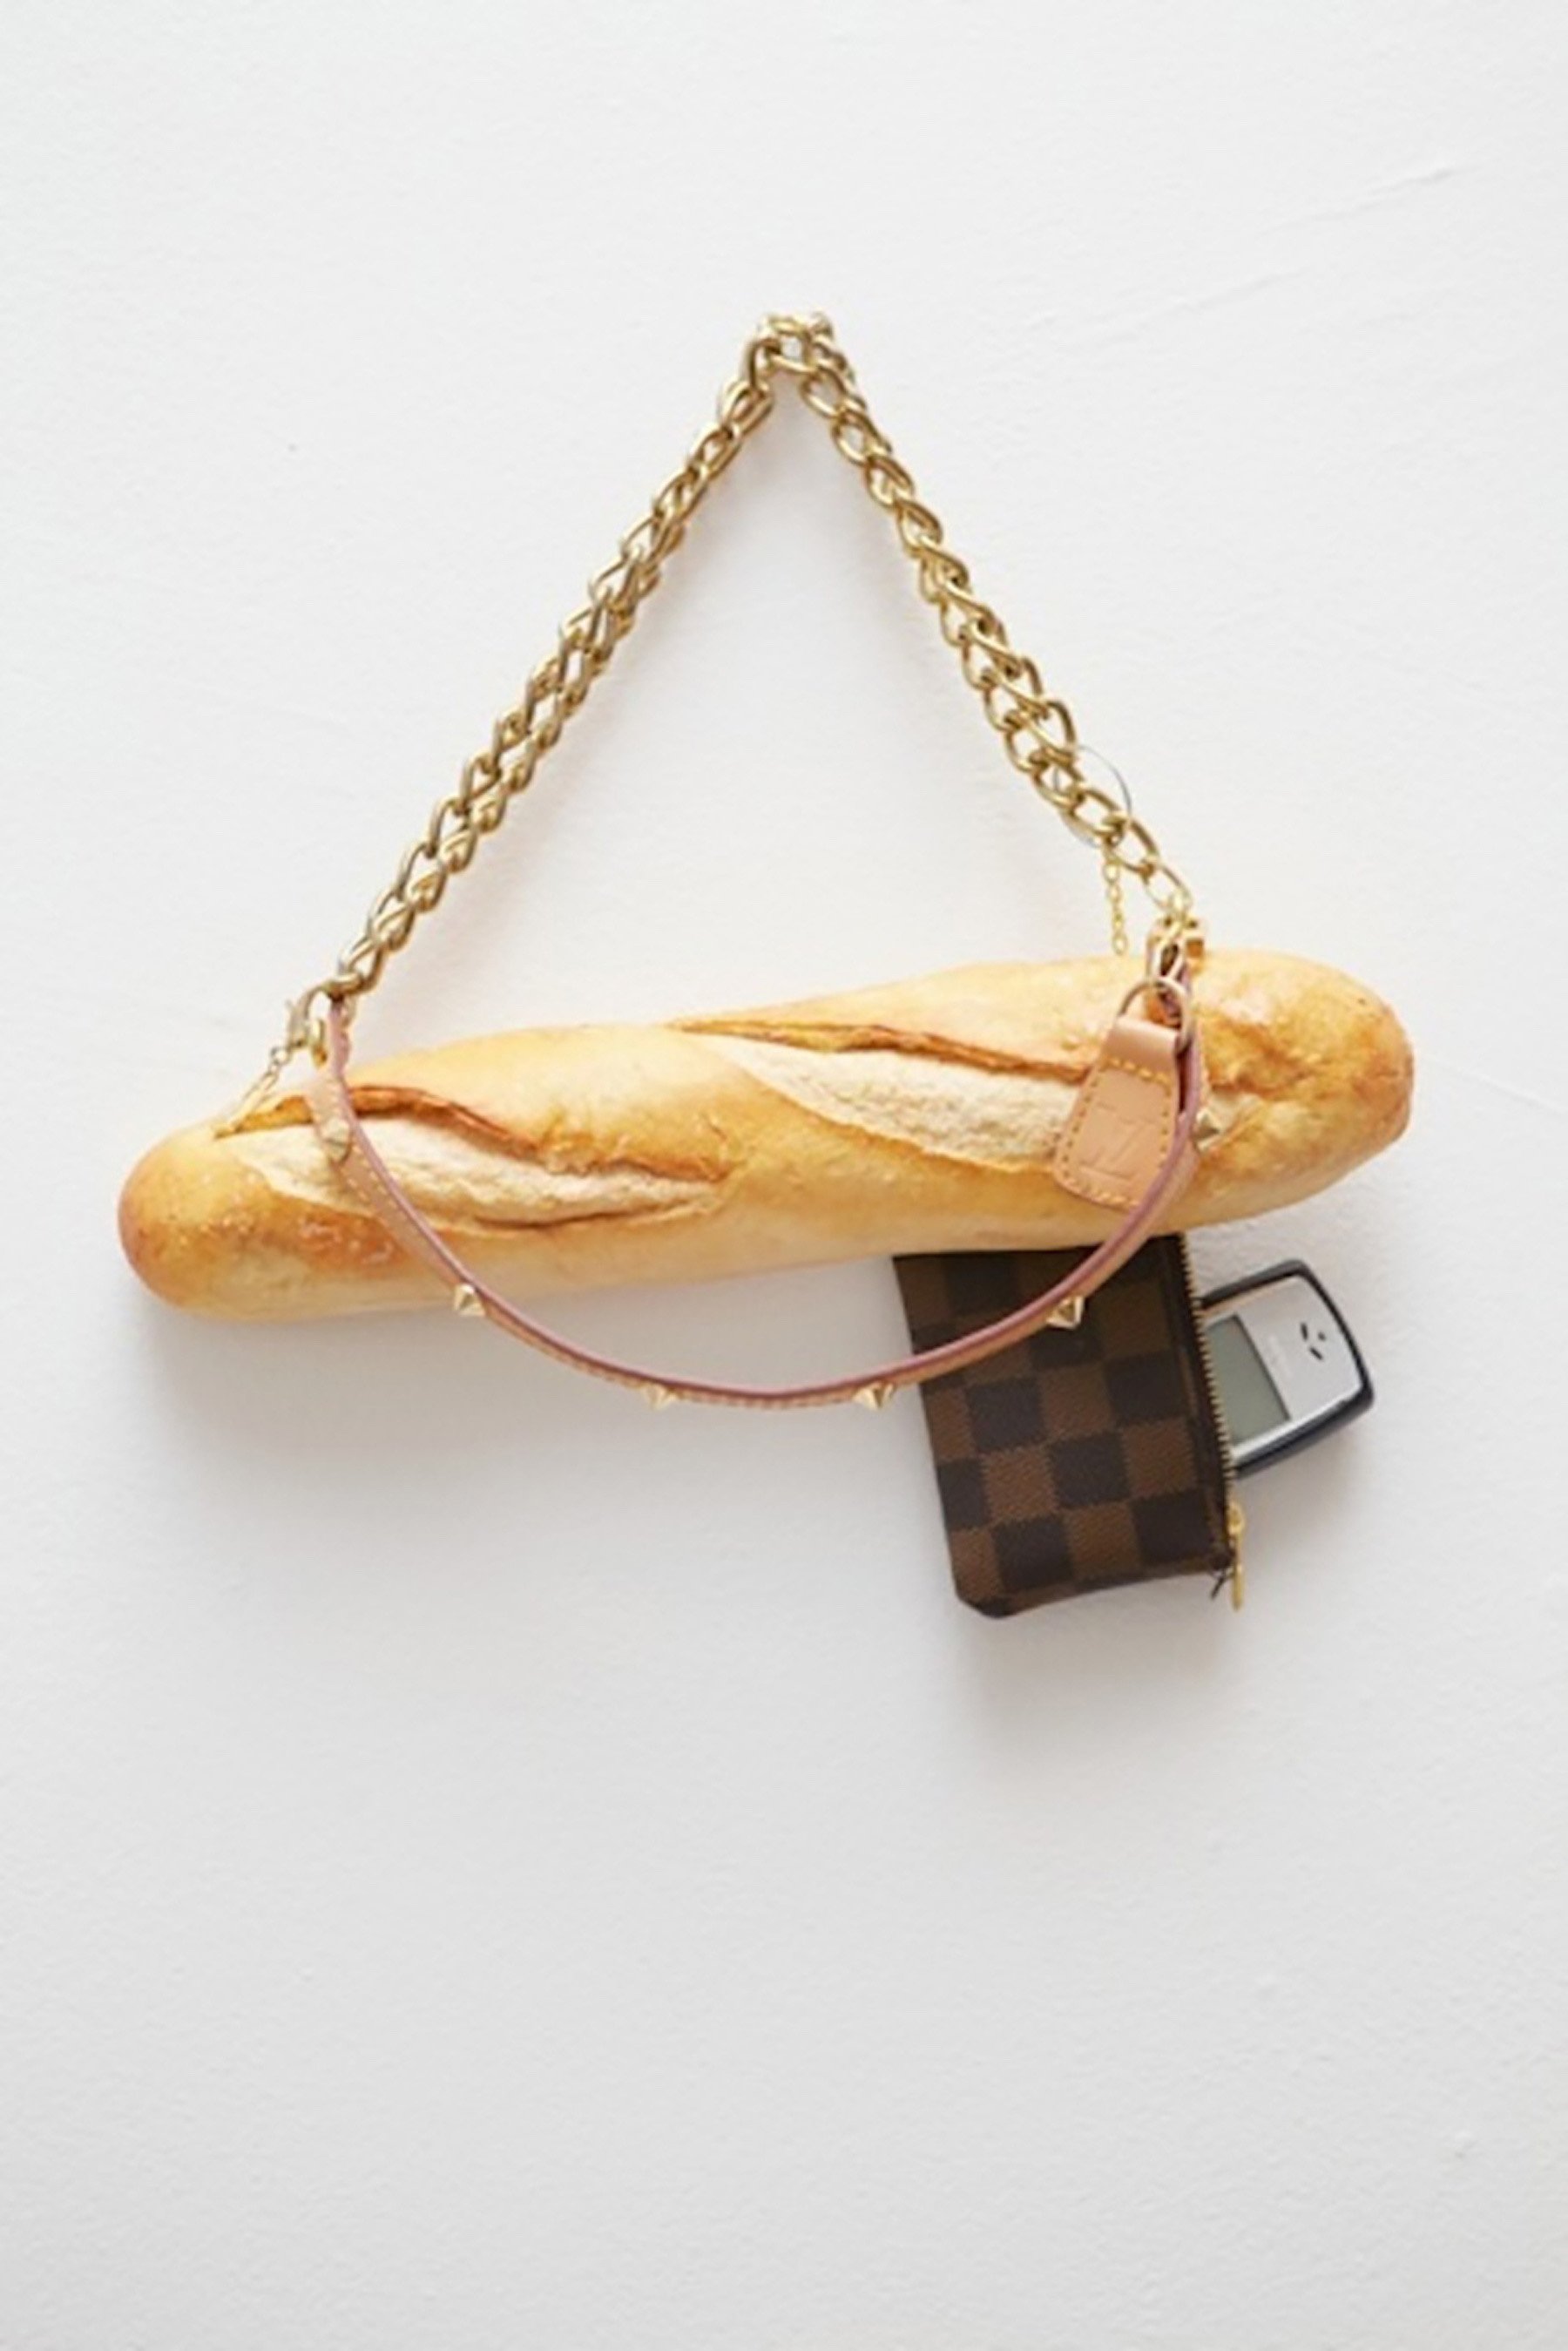 iGNANT-Art-Chloe-Wise-Bread-Bags-10